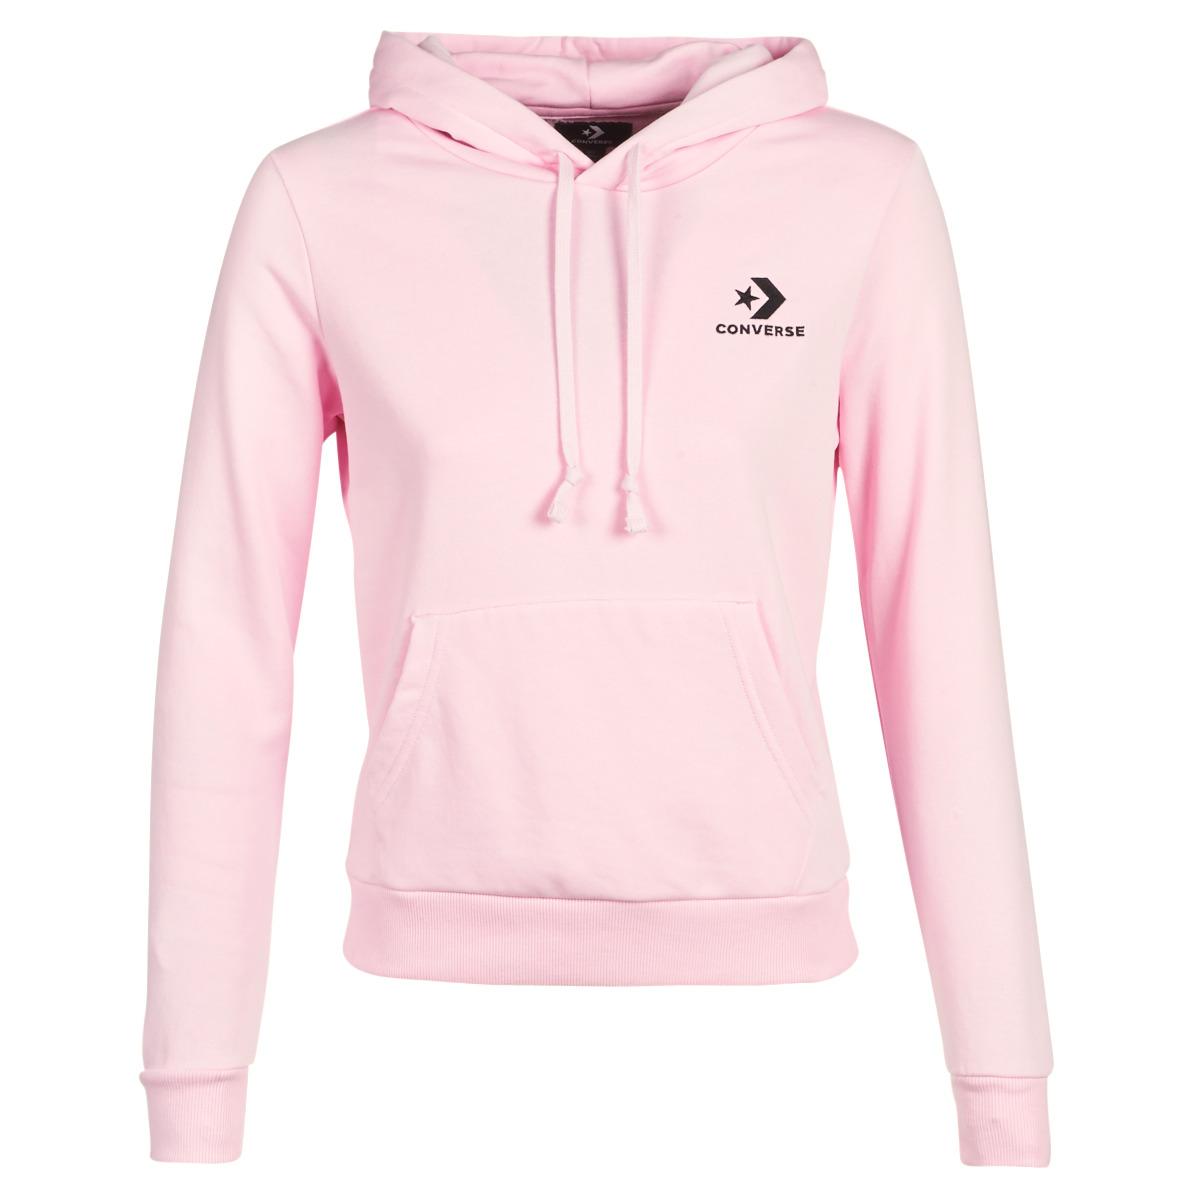 converse hoodie pink Online Shopping 